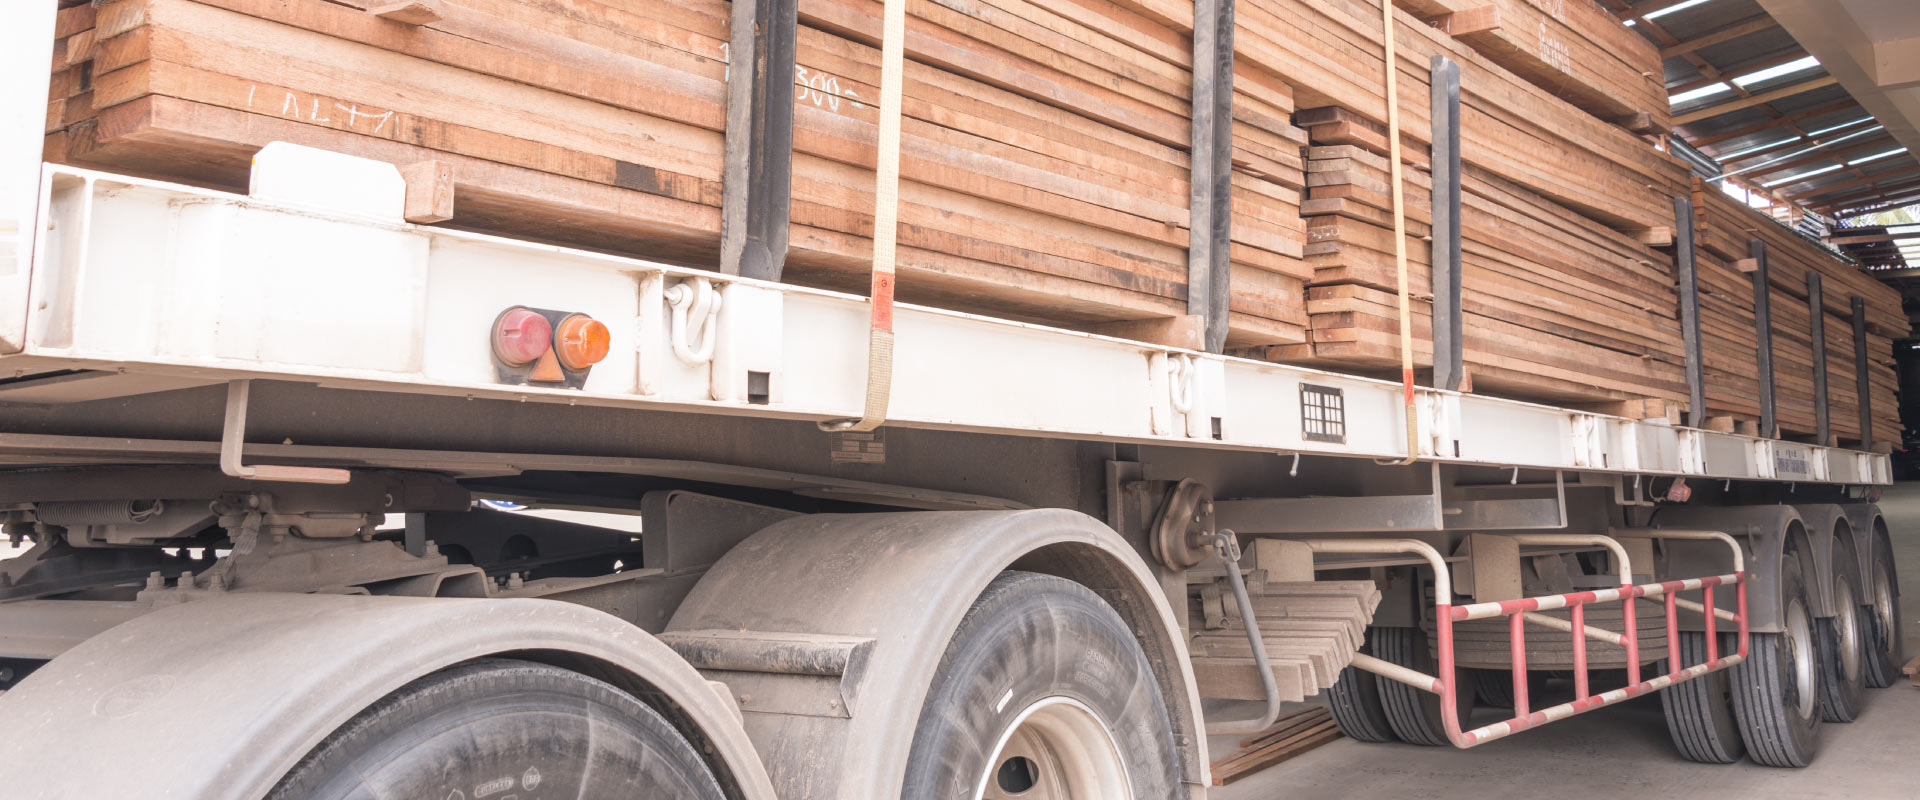 Making sure cargo is not a threat - Škoda Storyboard